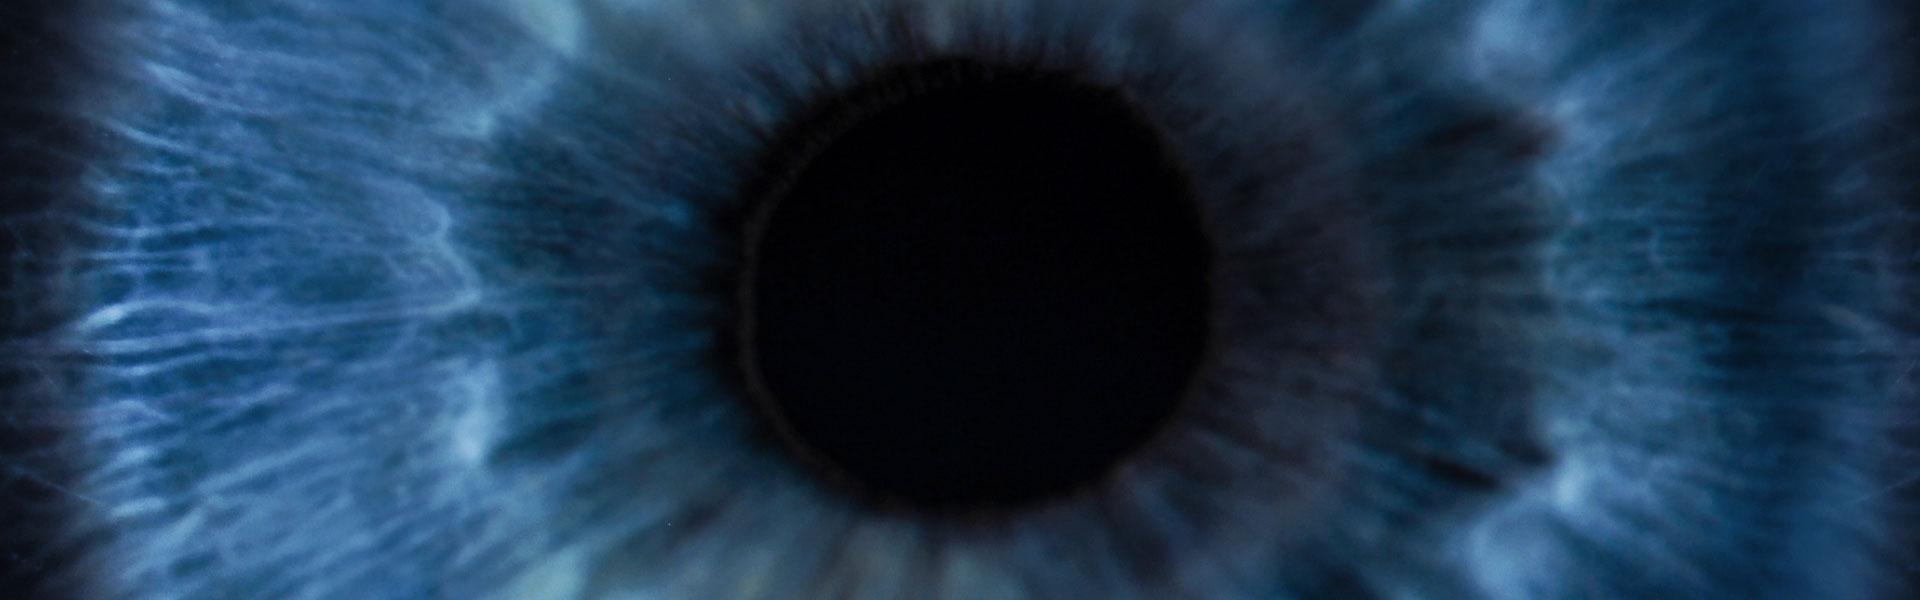 Cerca del iris de un ojo humano